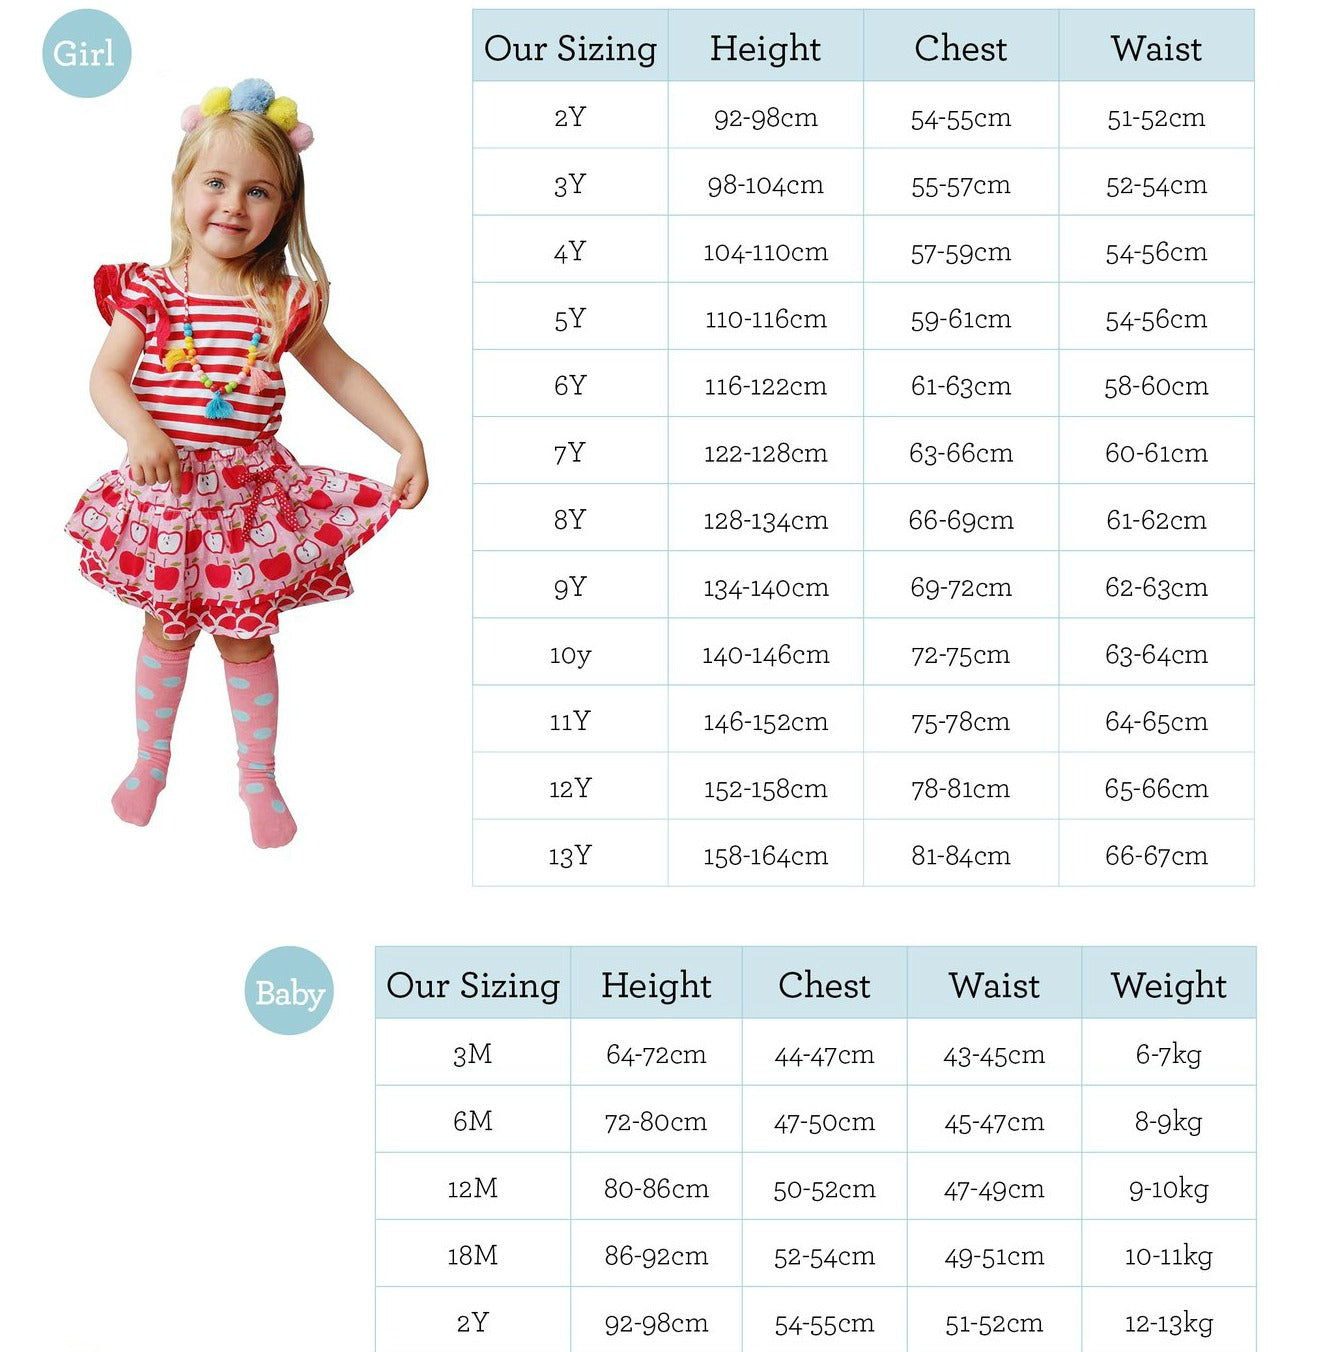 Girls Kids Clothing Size Chart